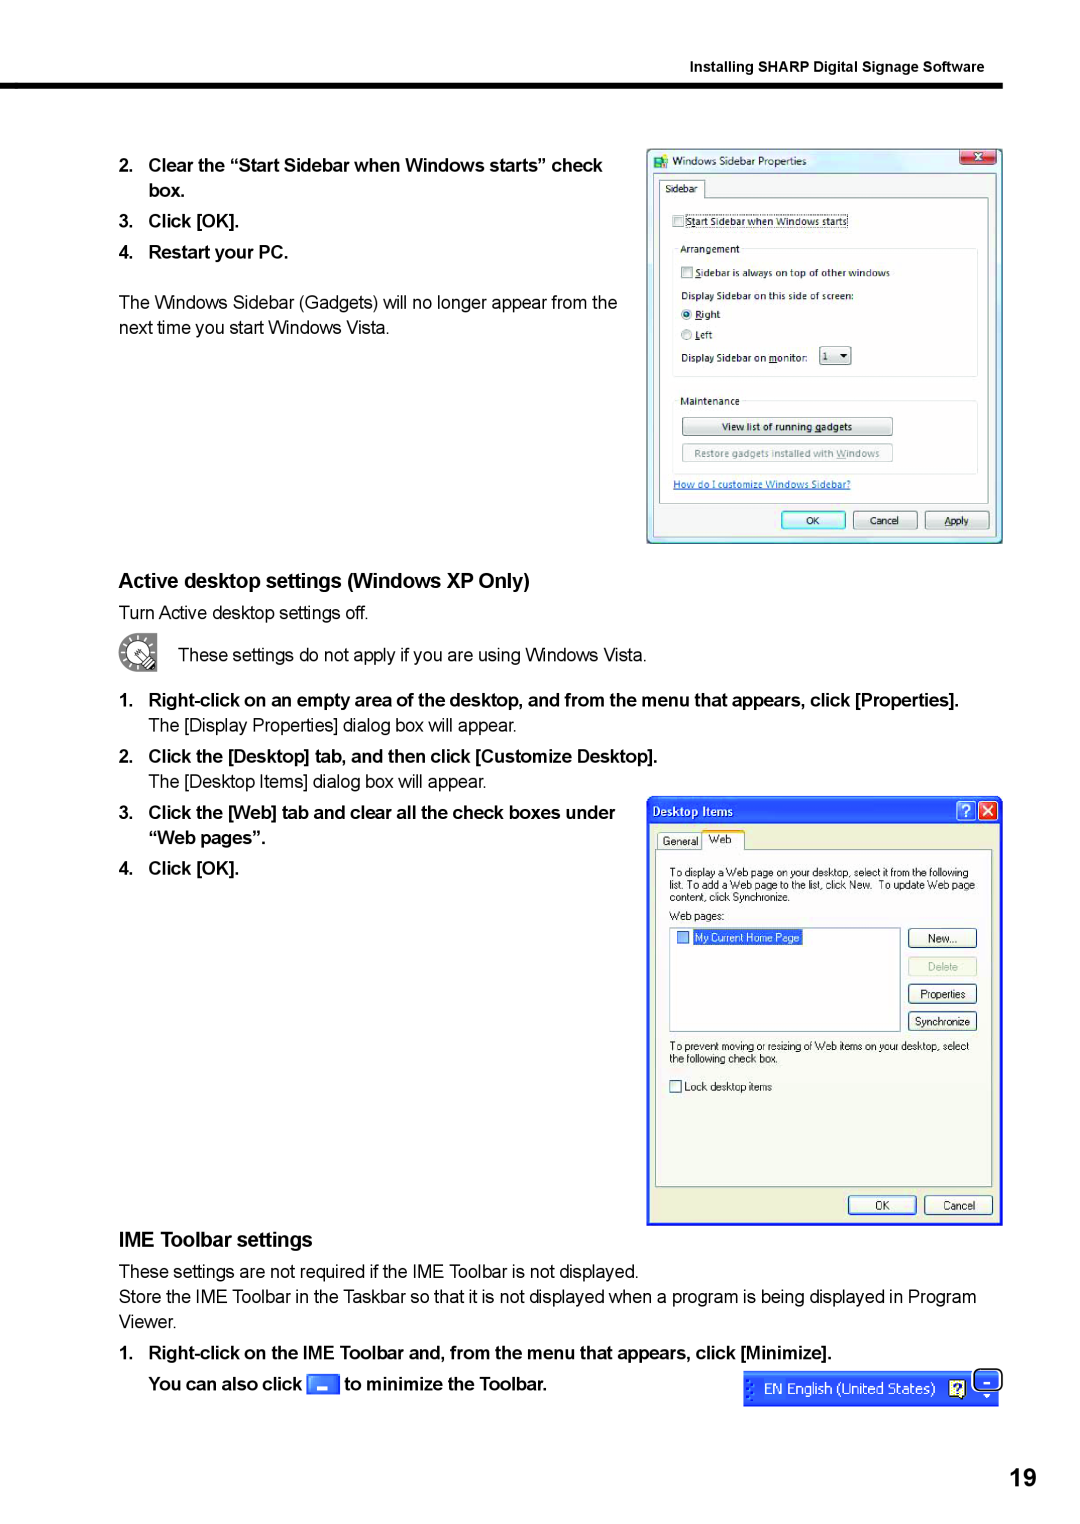 Sharp PNSV01 operation manual Active desktop settings Windows XP Only, IME Toolbar settings, Click OK 4. Restart your PC 